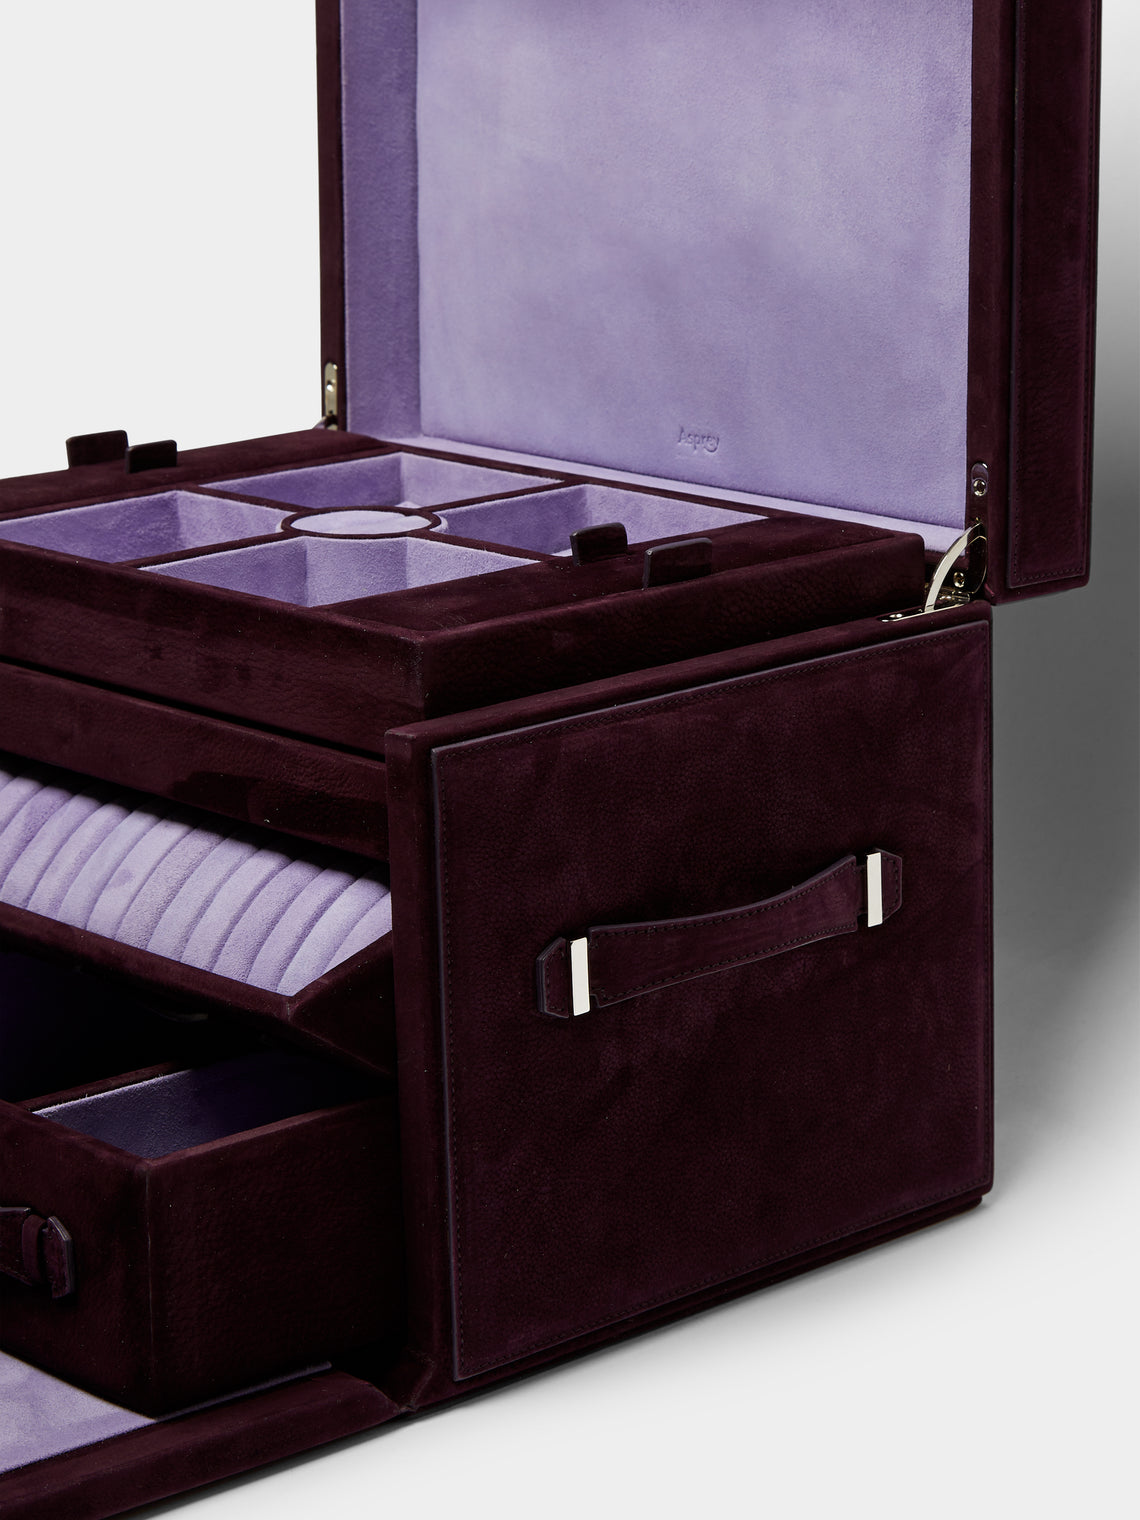 Asprey - Leather Large Jewellery Box -  - ABASK